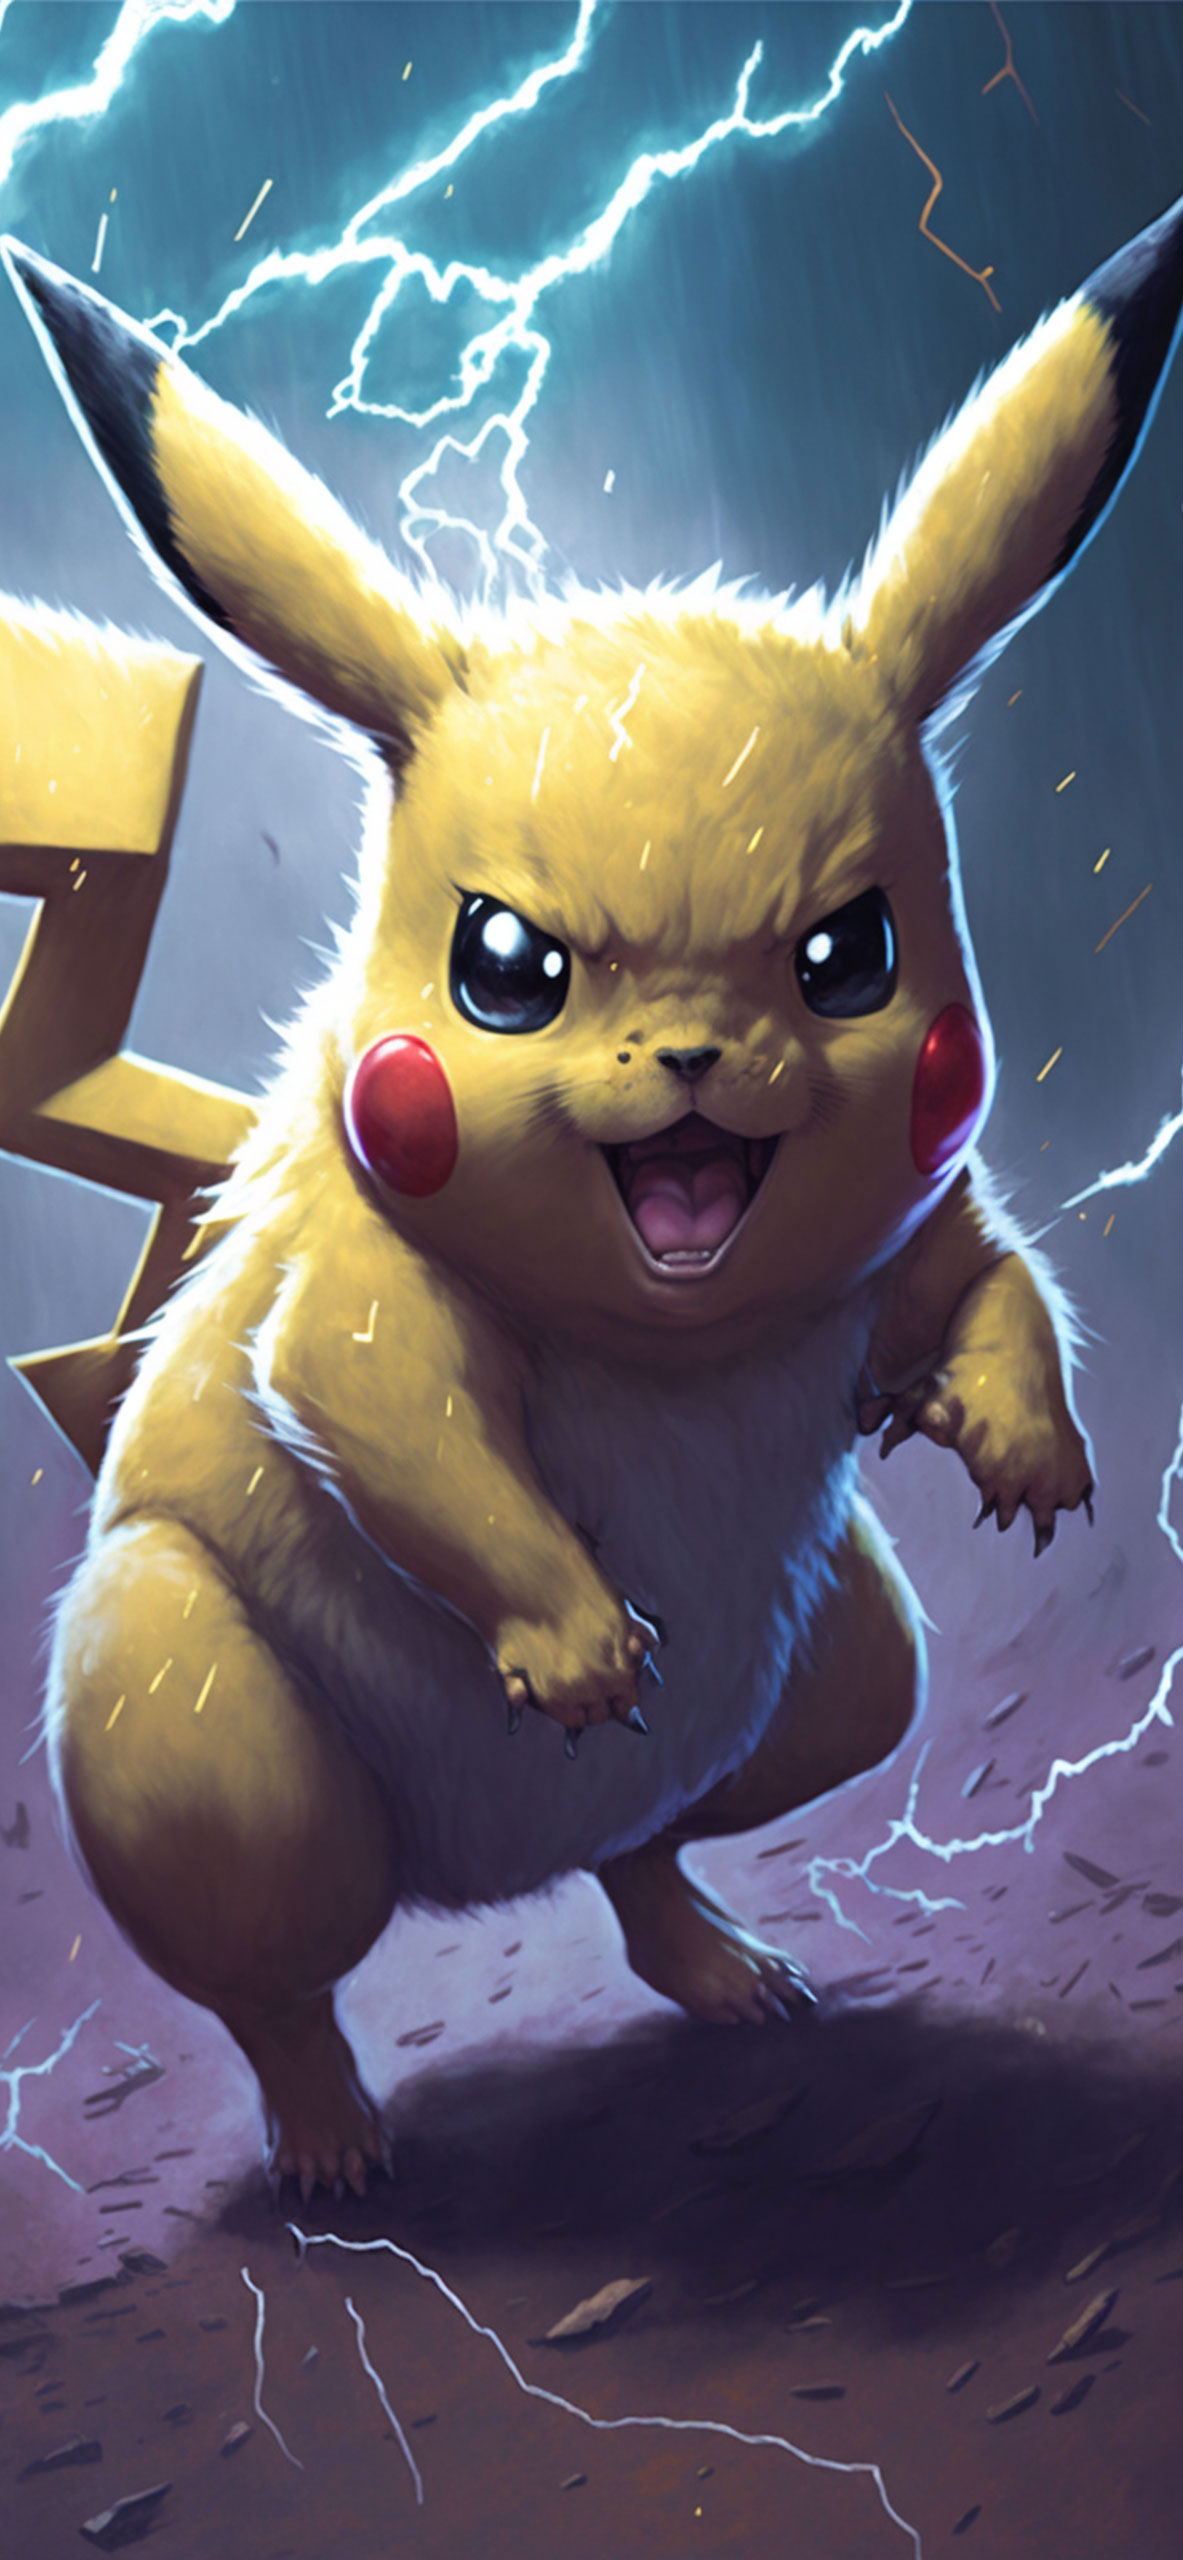 Pokémon Pikachu & Lightning Wallpaper